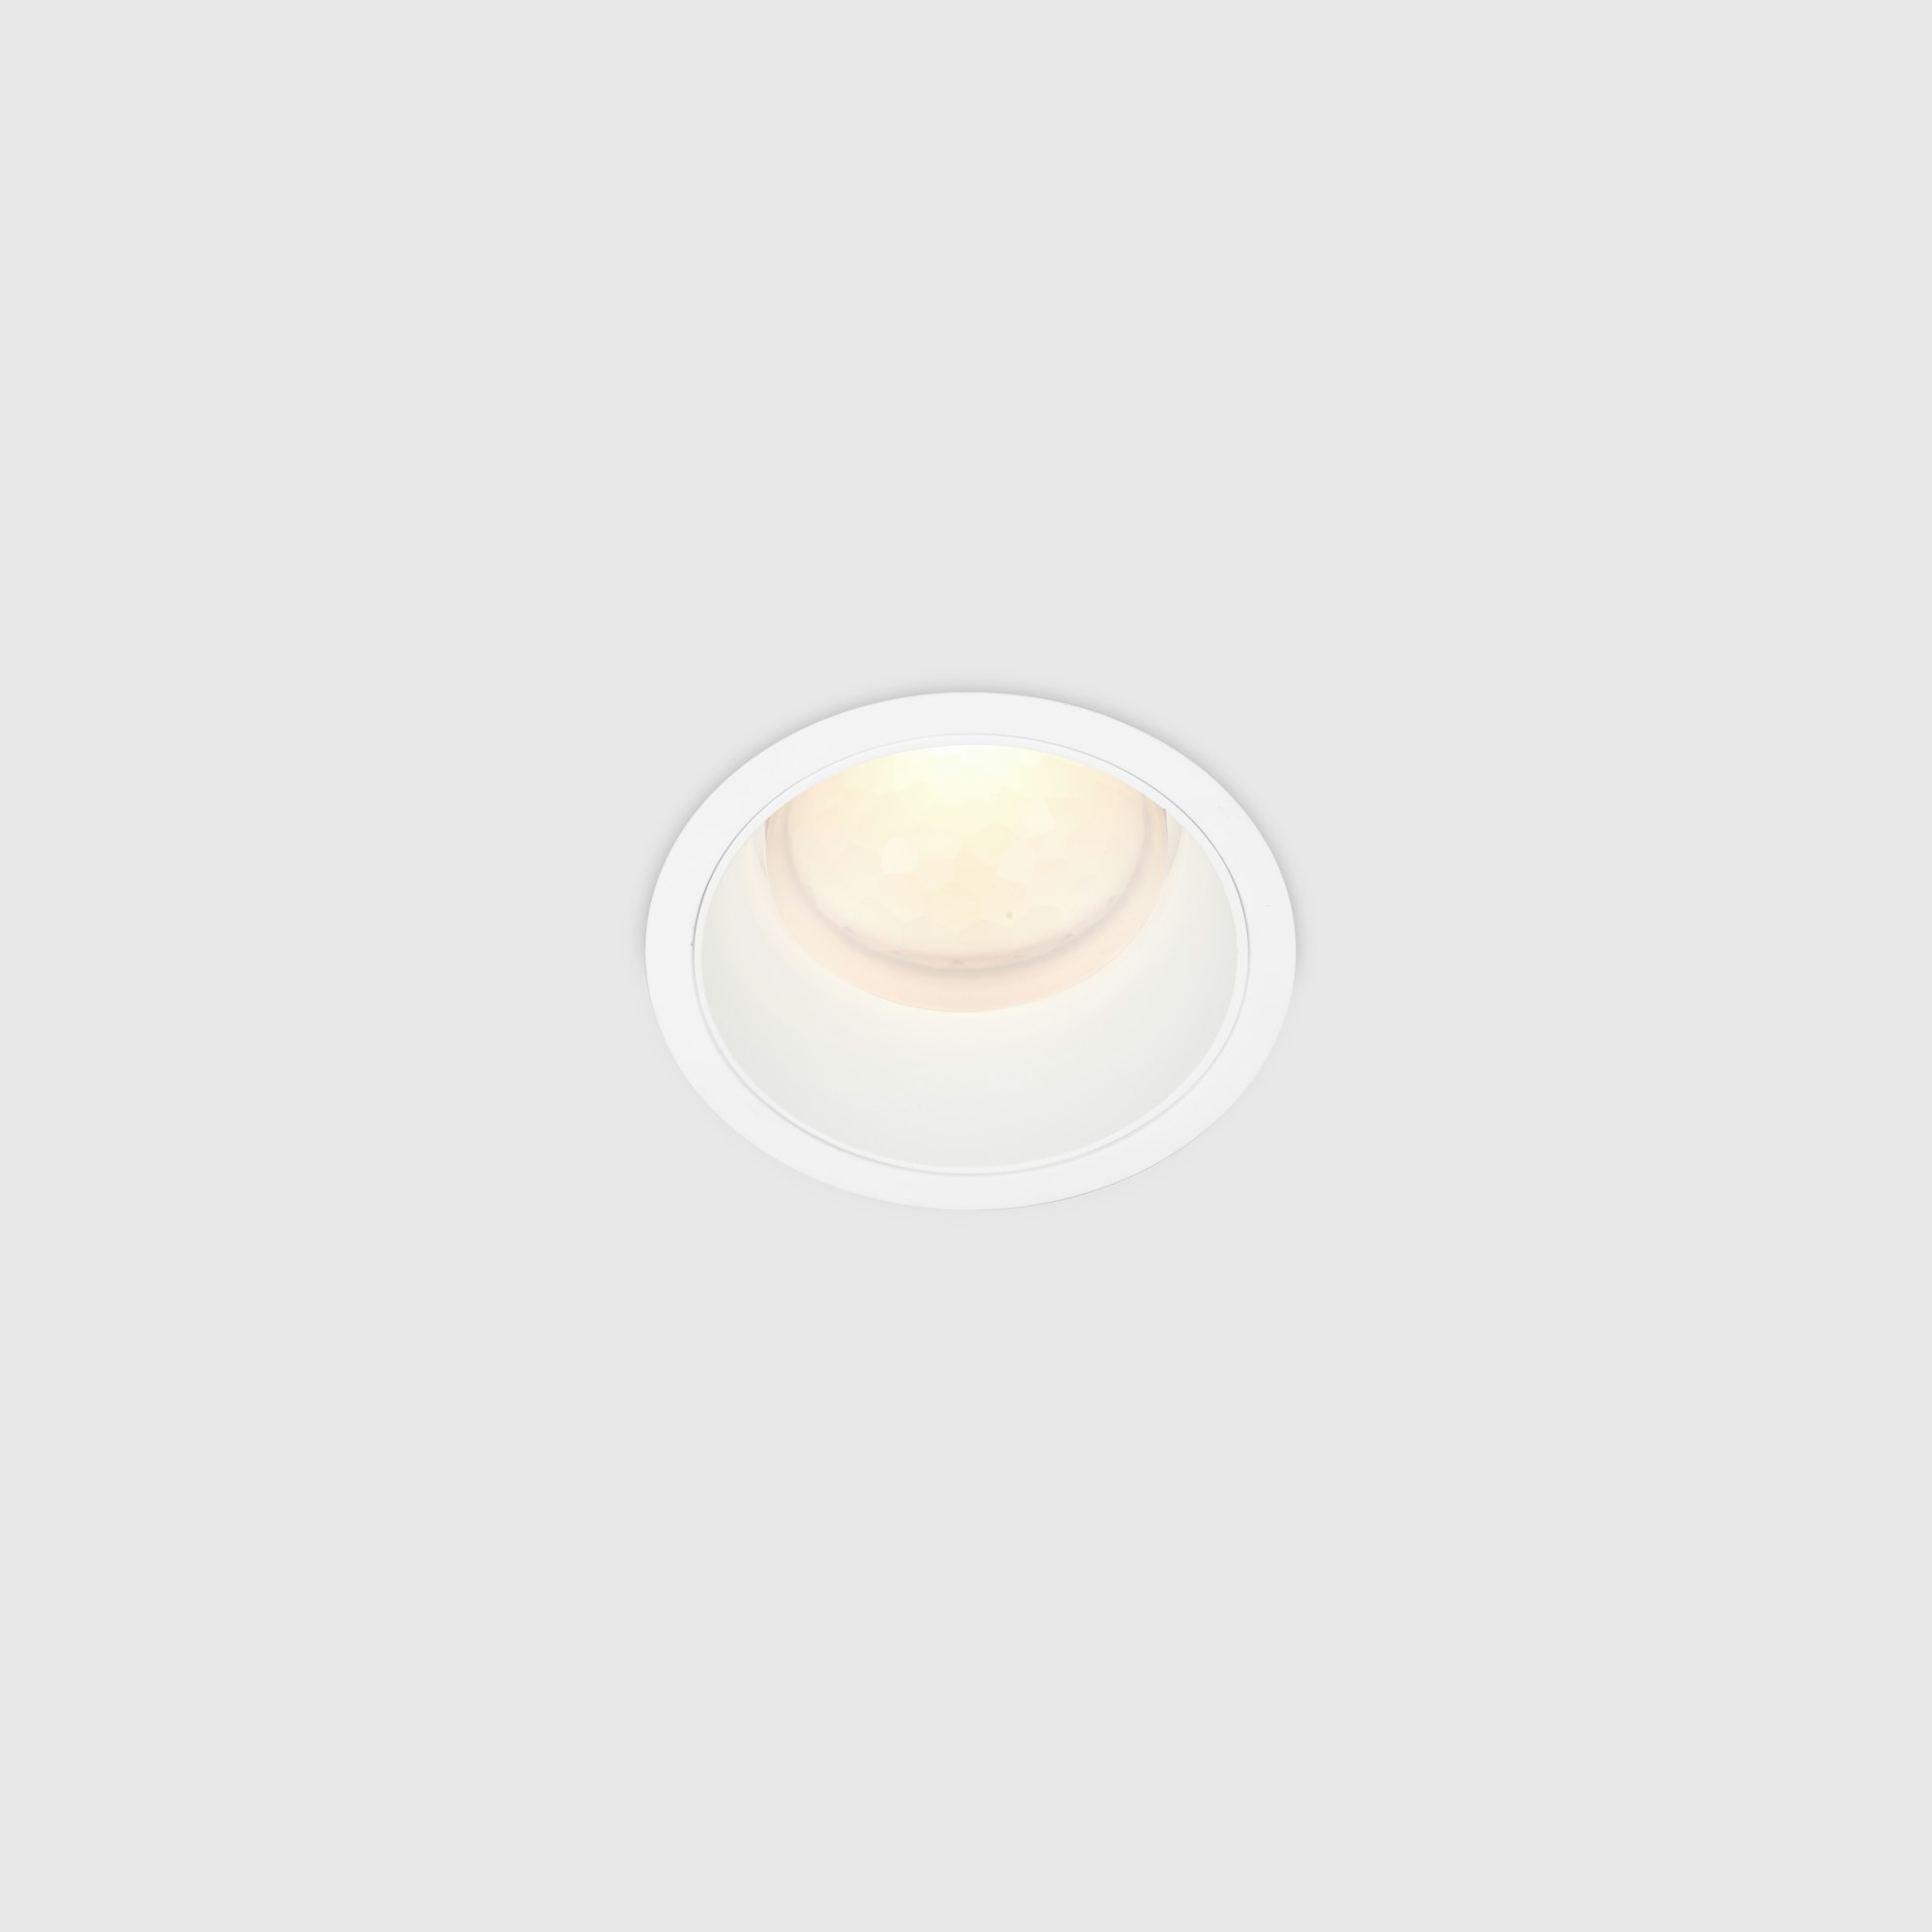 Inti - Downlight - White ©️ Kreon